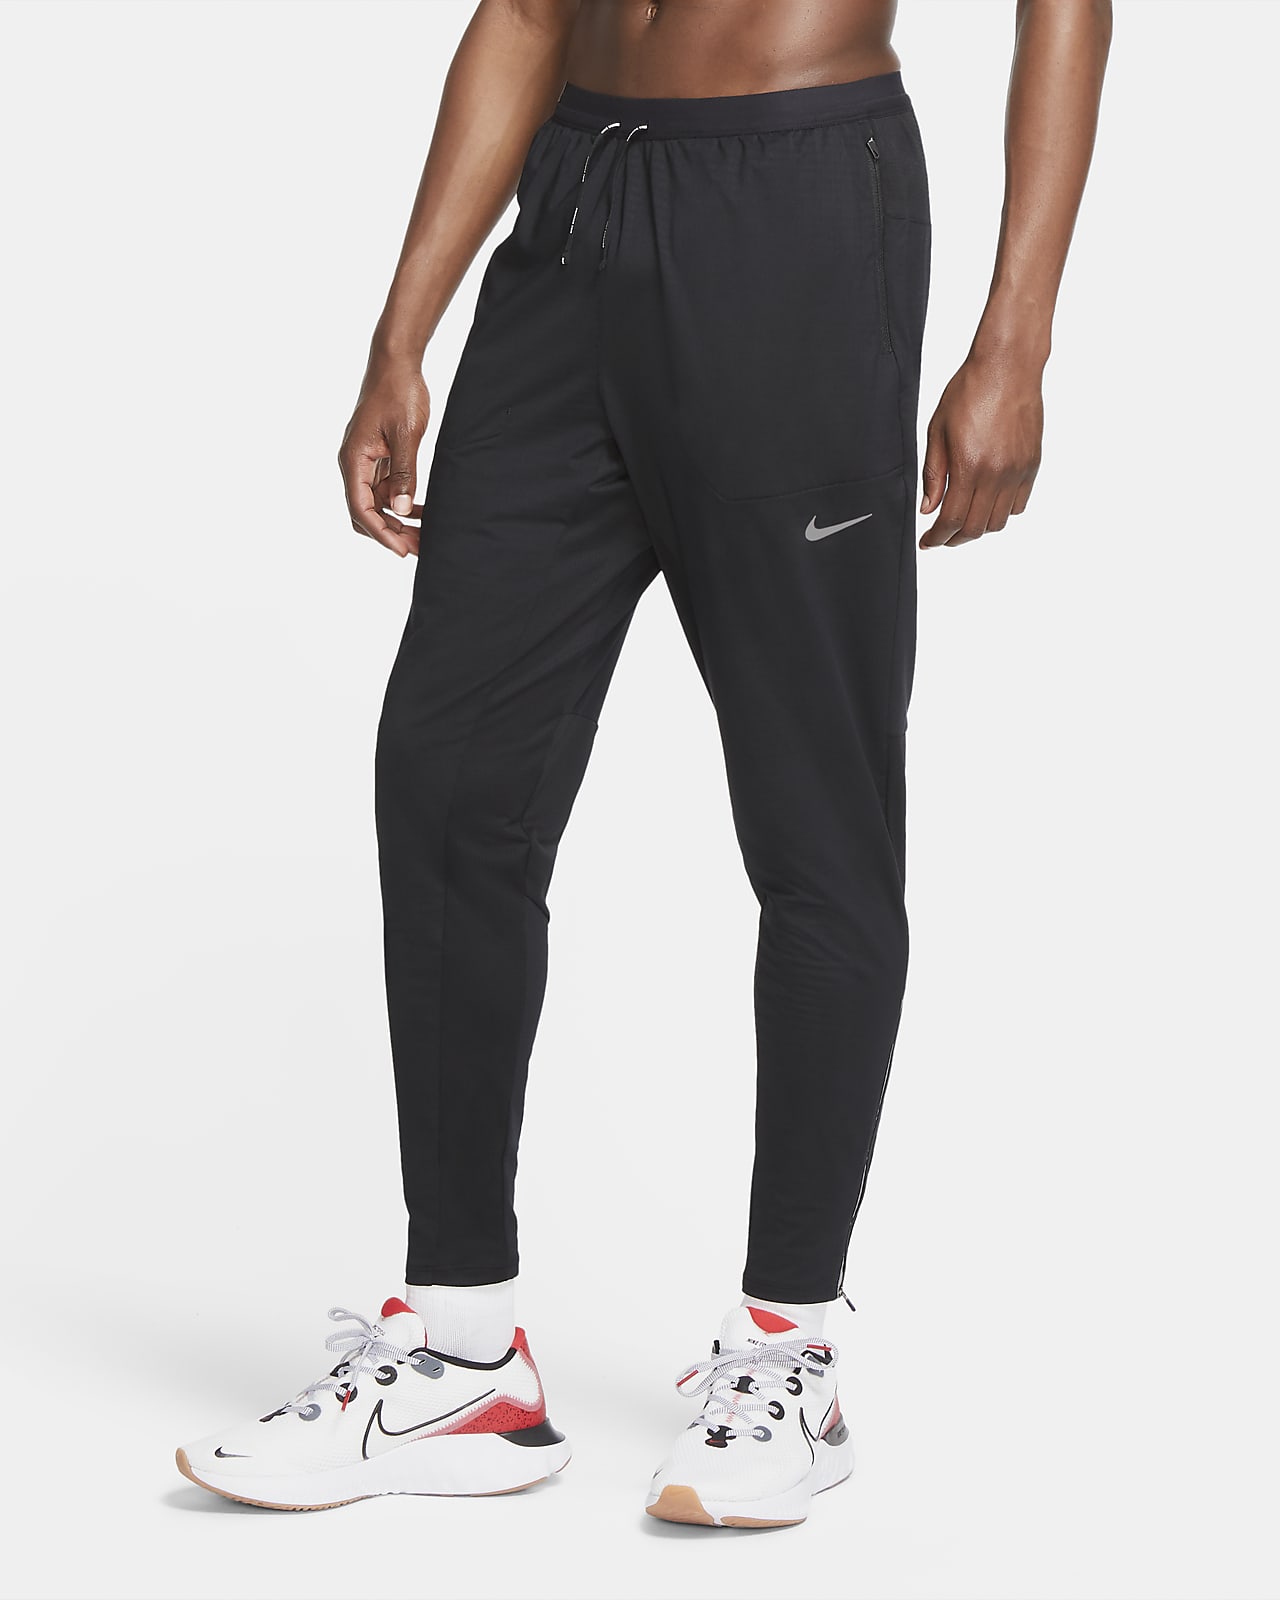 Nike Phenom Elite kötött férfi futónadrág